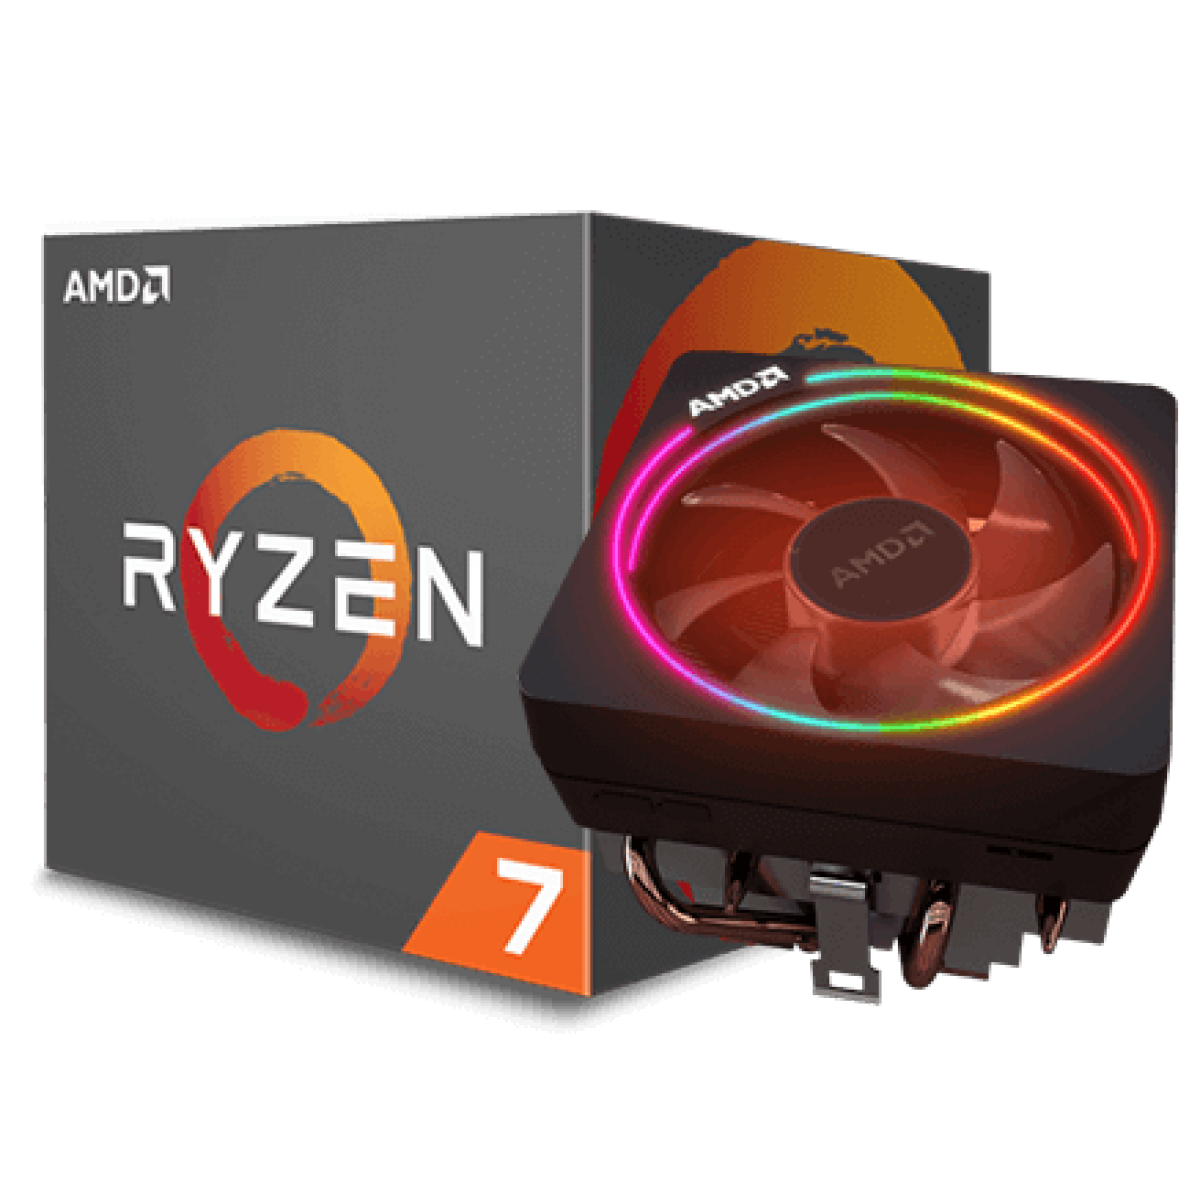 Ryzen 5800x кулер. AMD Ryzen 7 2700x (Box). AMD Ryzen 7 5800x Box кулер. AMD 7 2700x кулер. AМD Ryzen 7 2700 8/16.